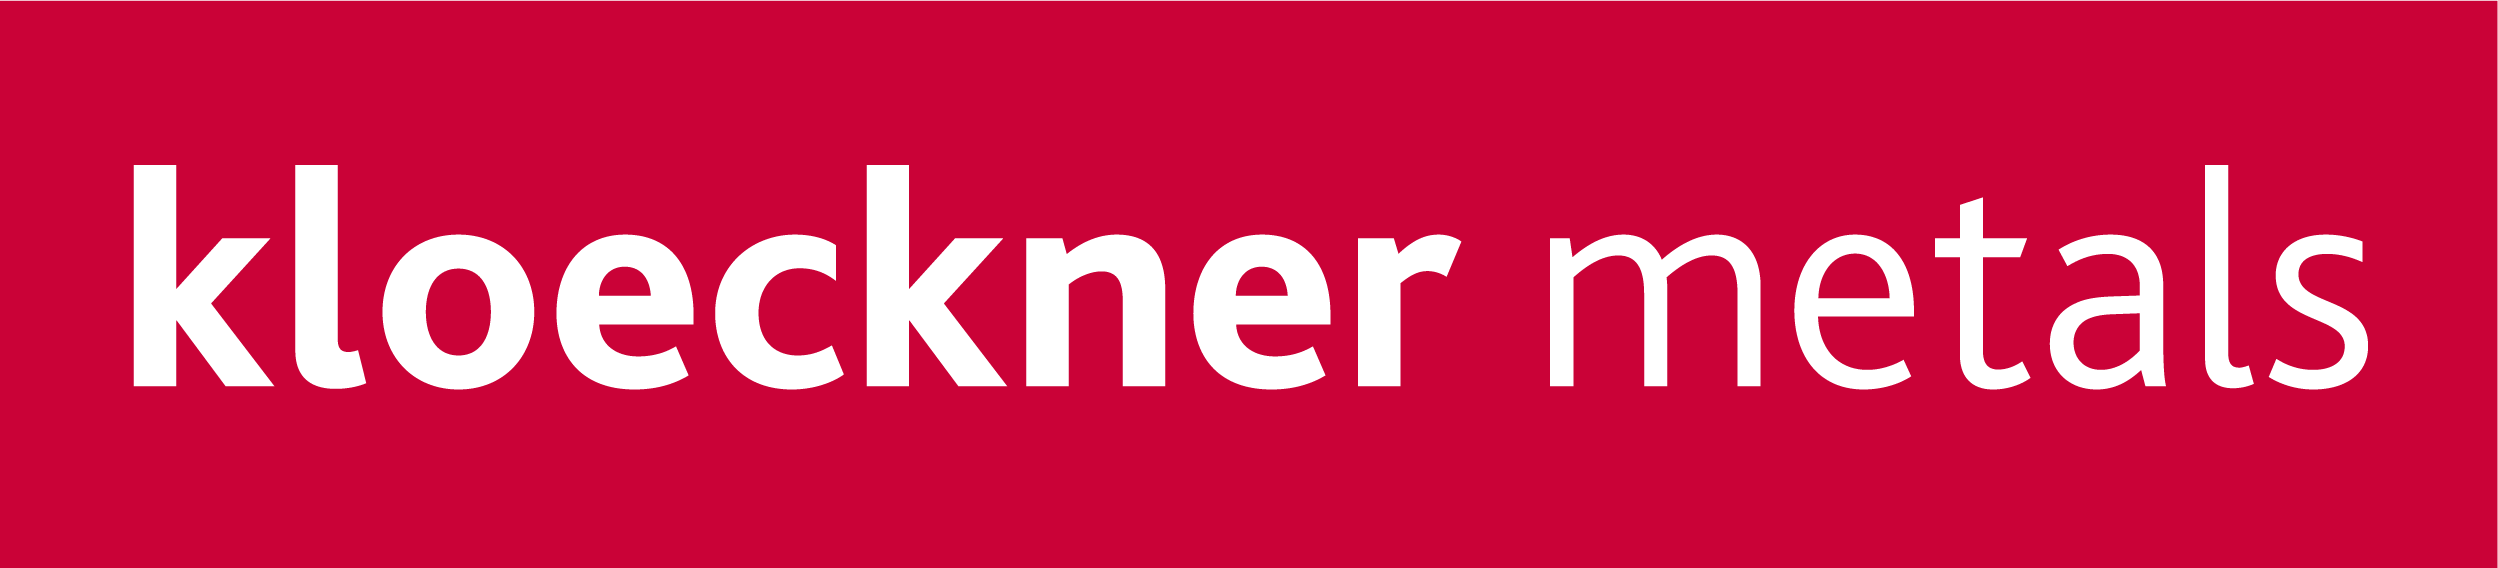 Kloeckner Metals Company Logo